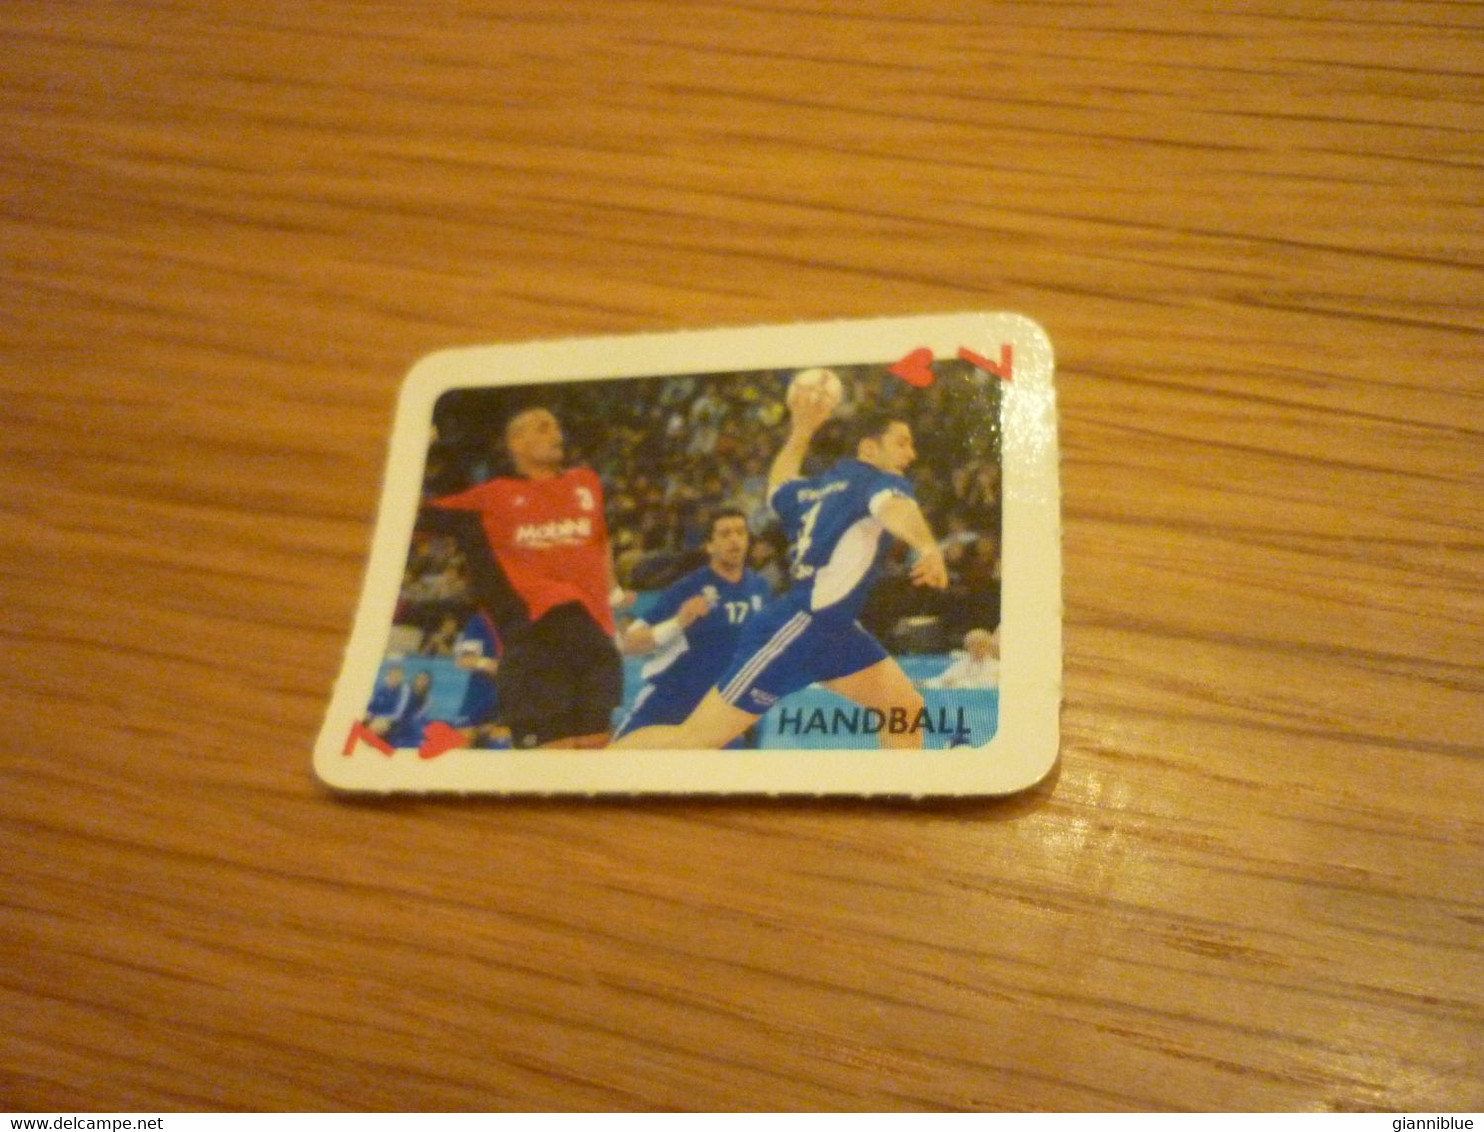 Handball Olympic Games Greek Mini Trading Playing Card - Palla A Mano